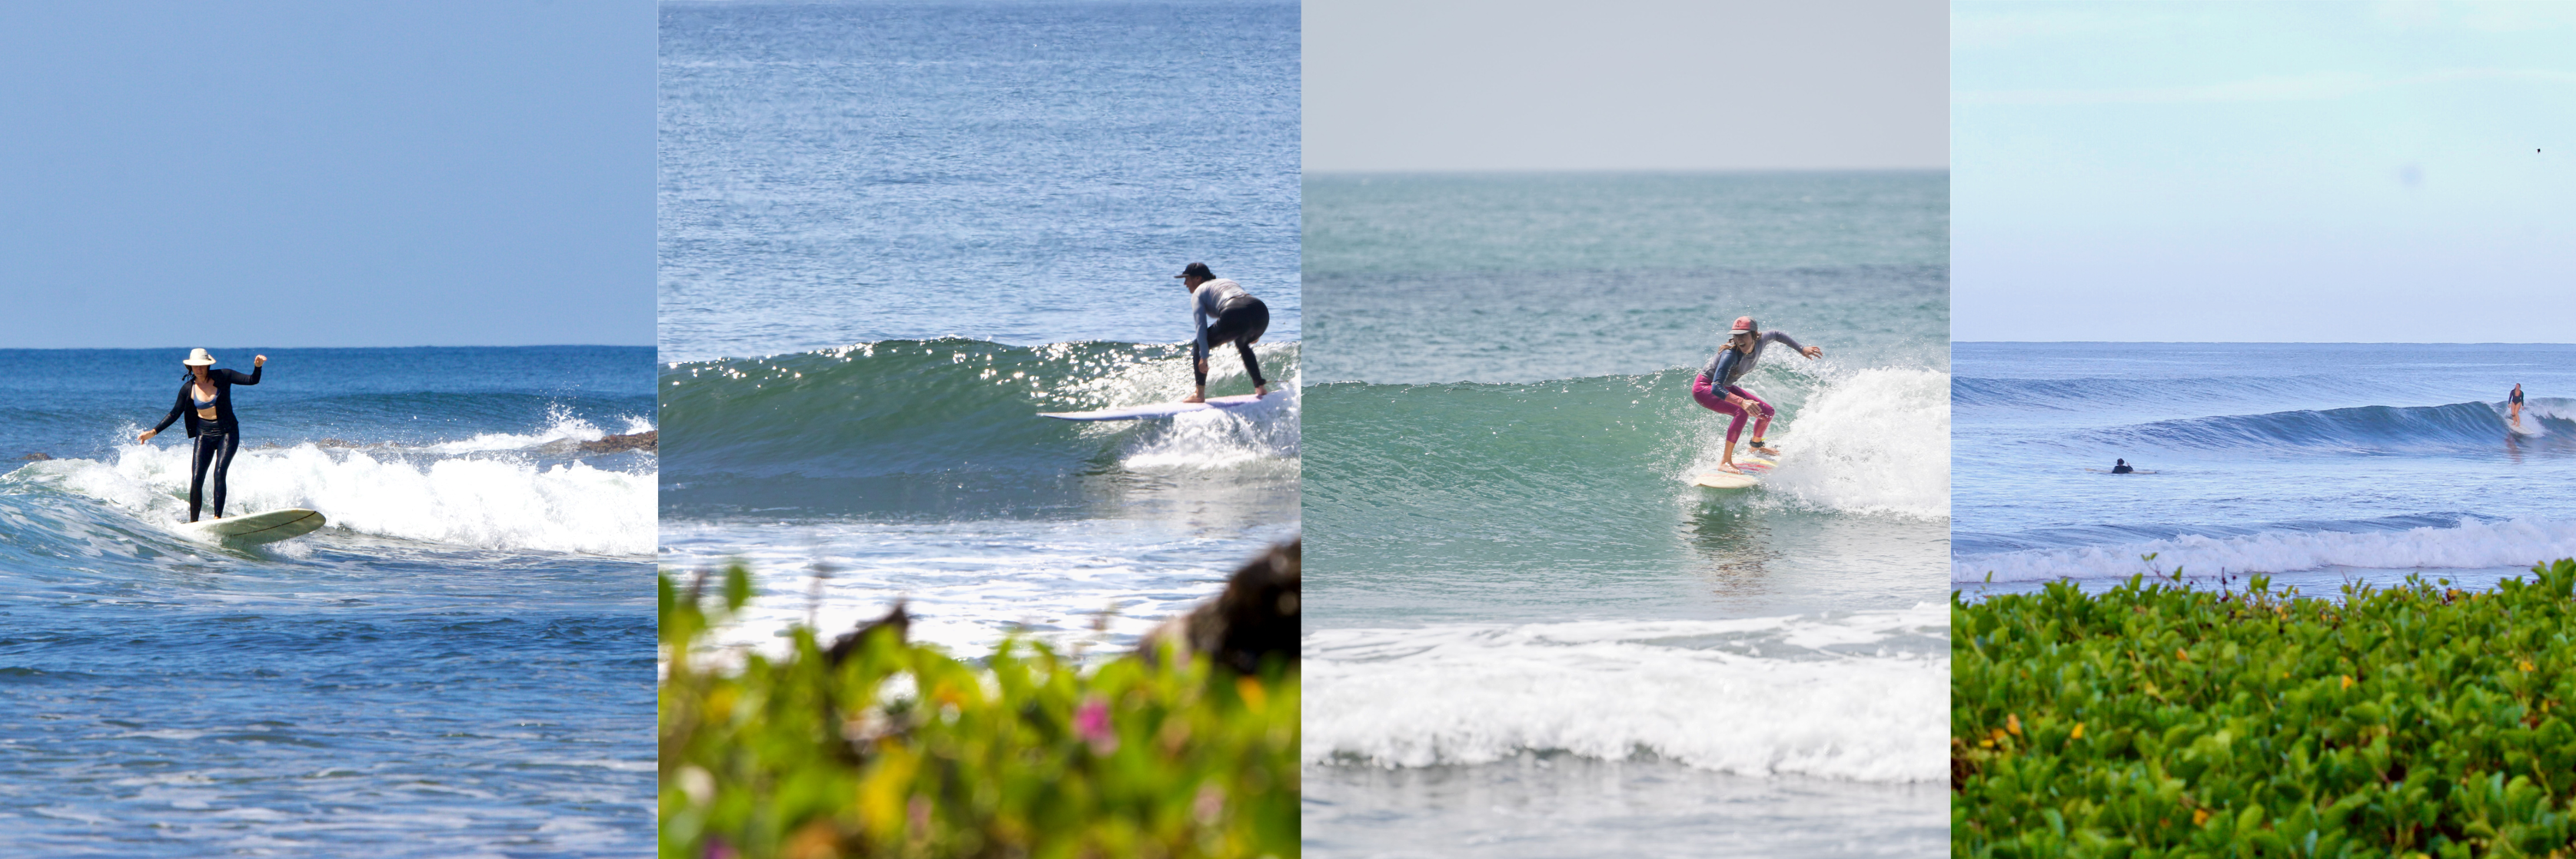 Surf With Amigas Nicaragua Beach Break